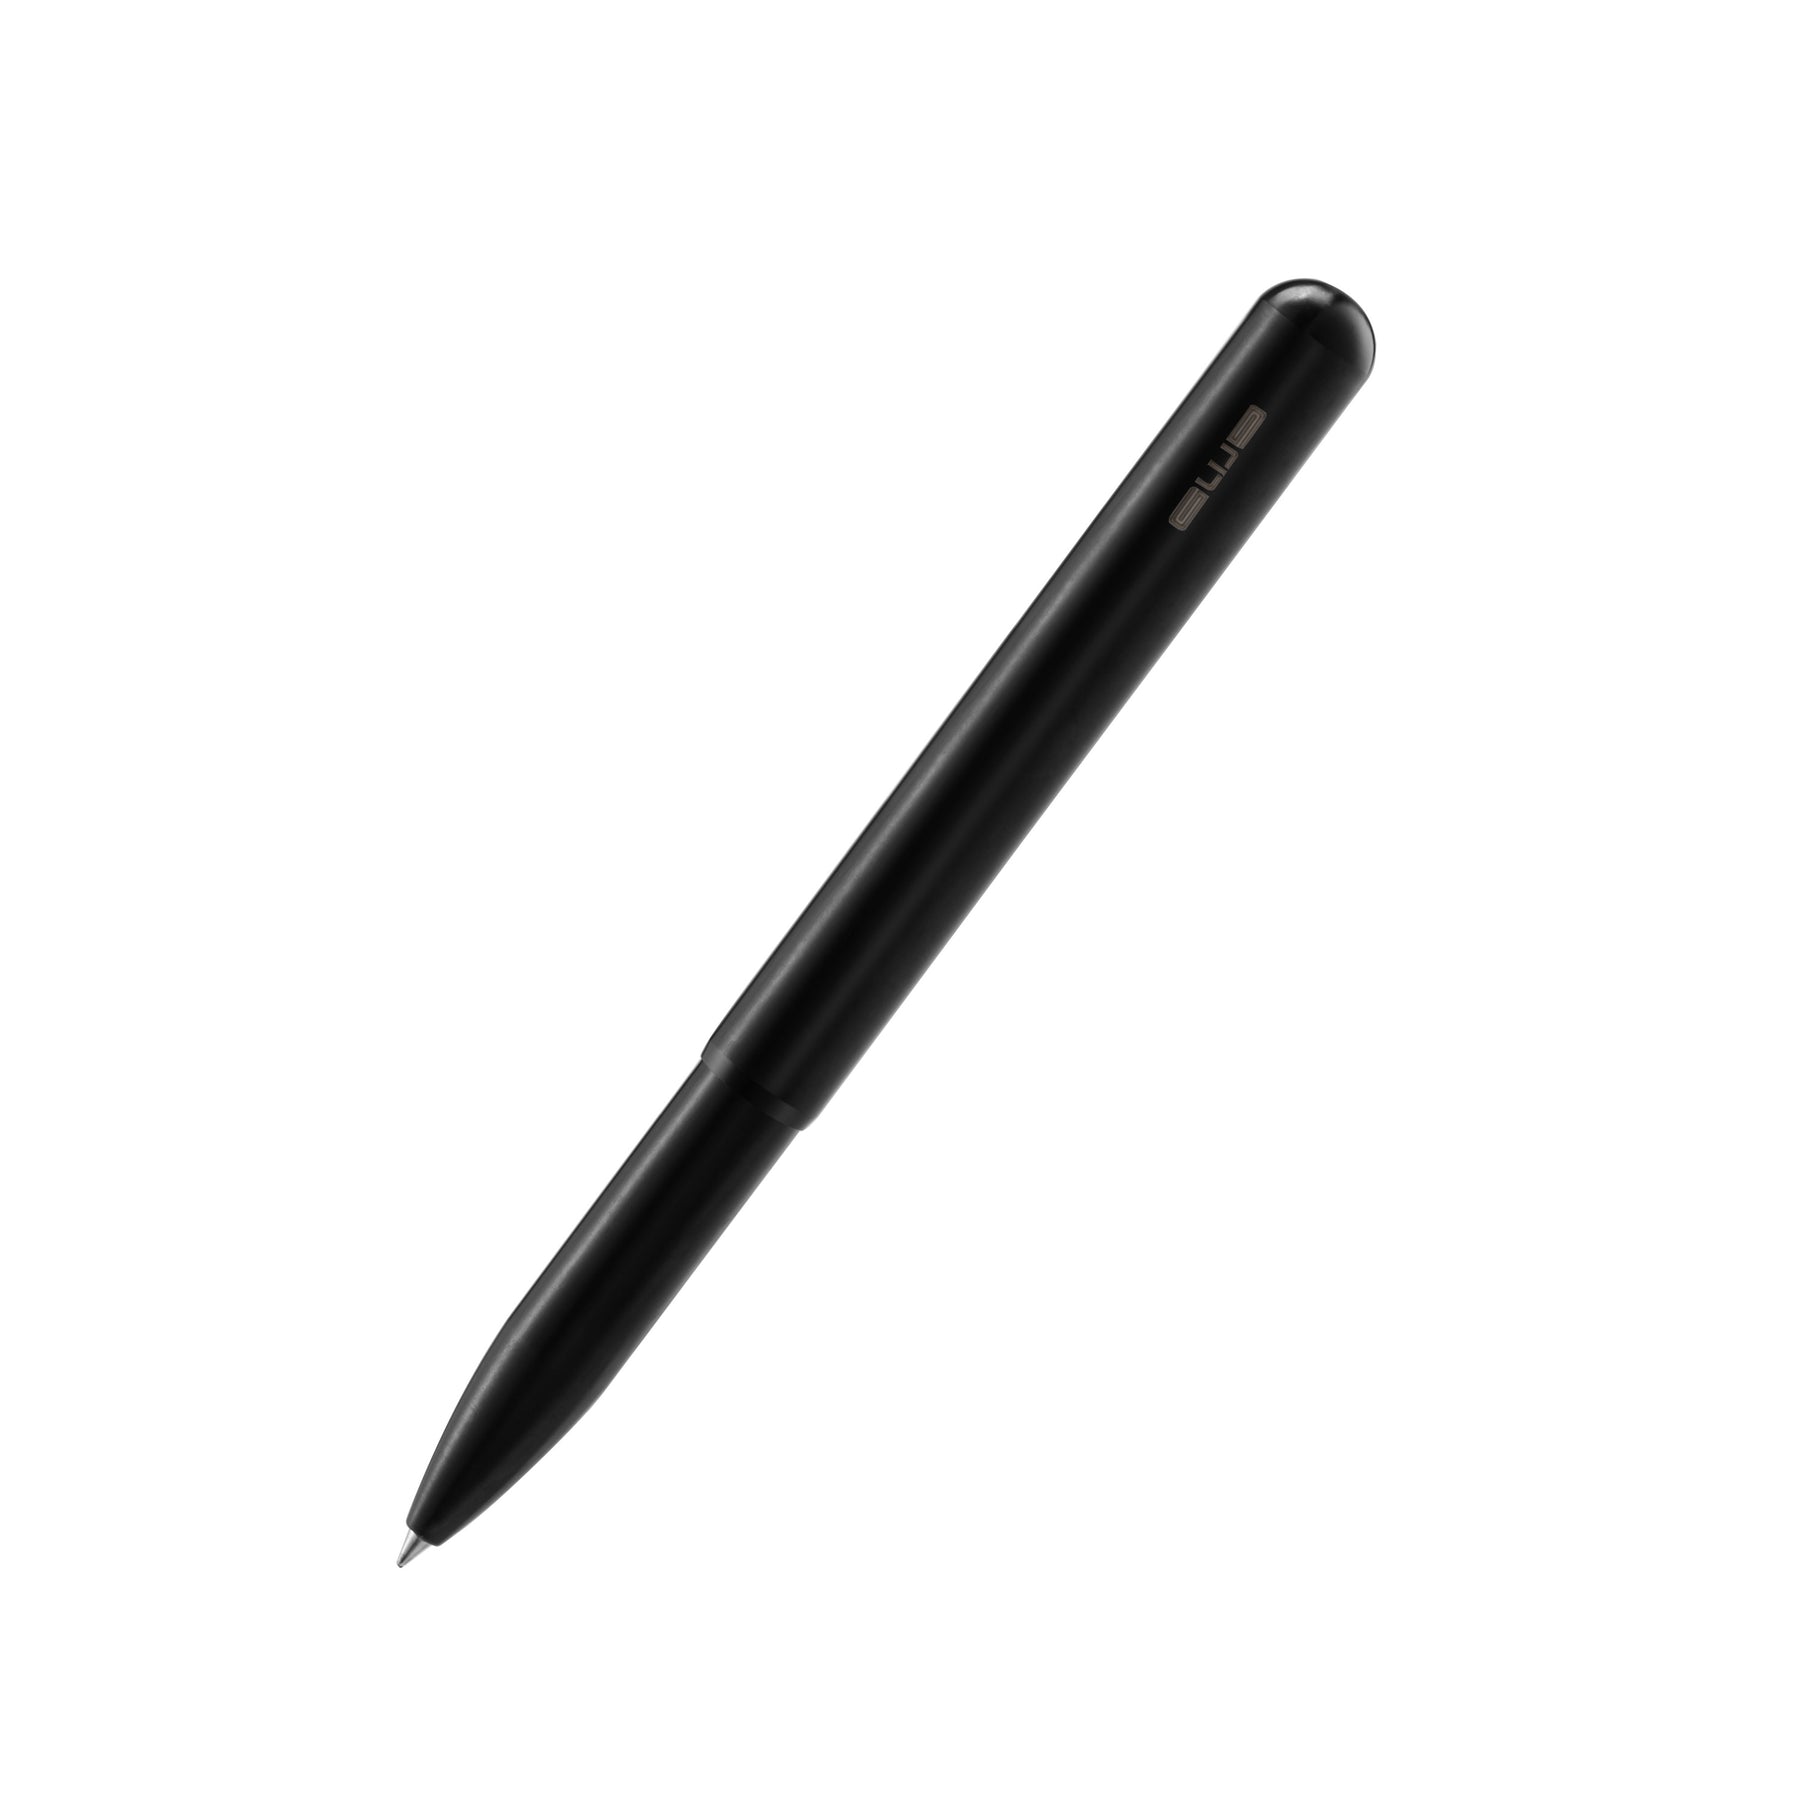 GW9 Aluminum Pen with Stand - Black